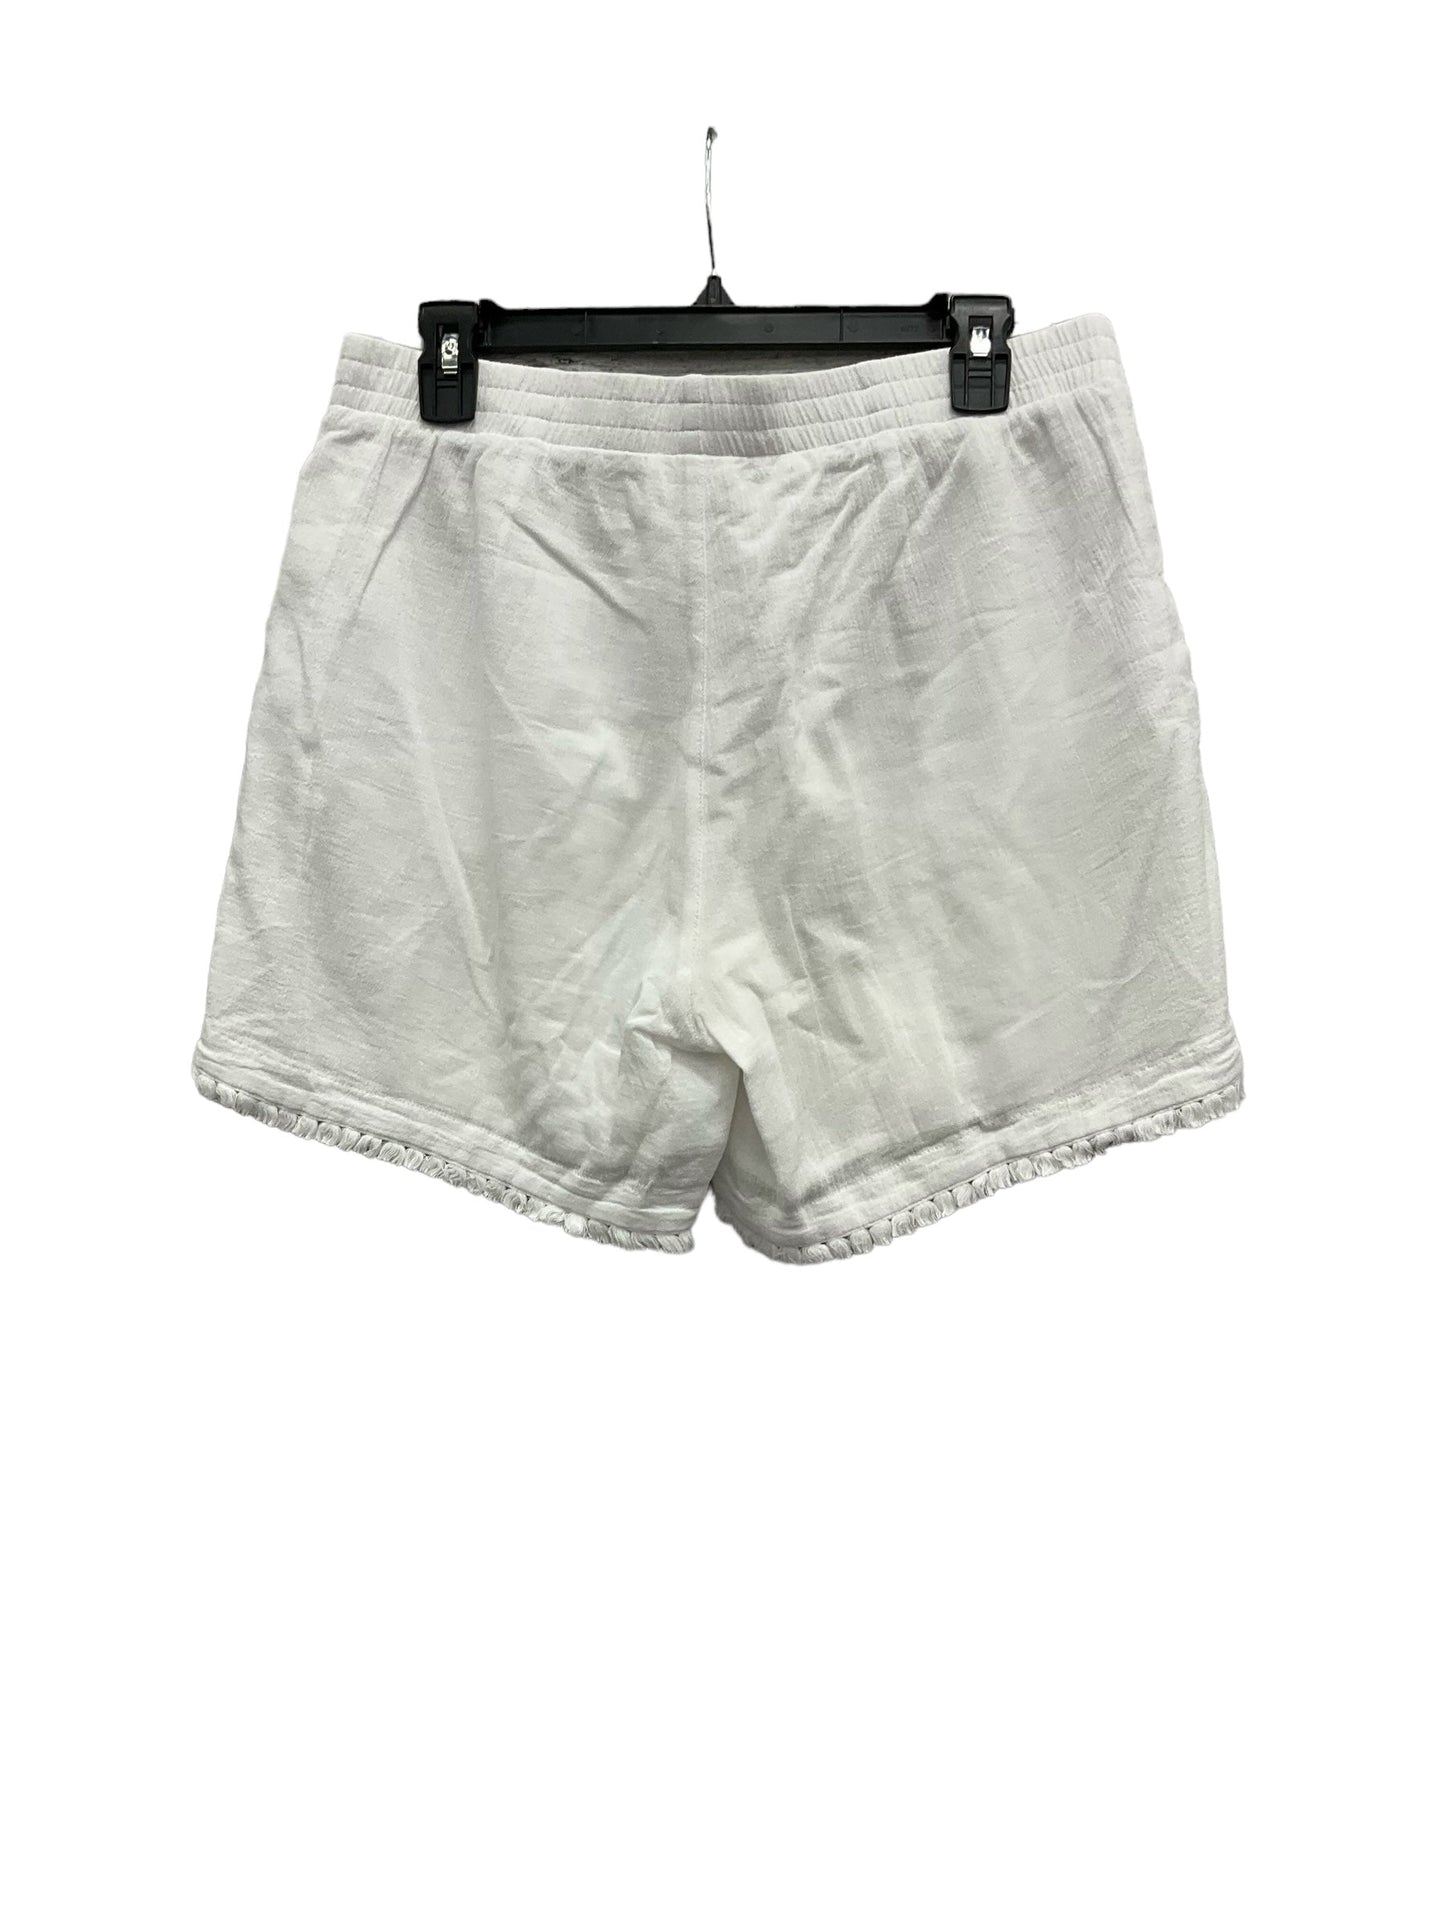 Shorts By J. Jill  Size: S